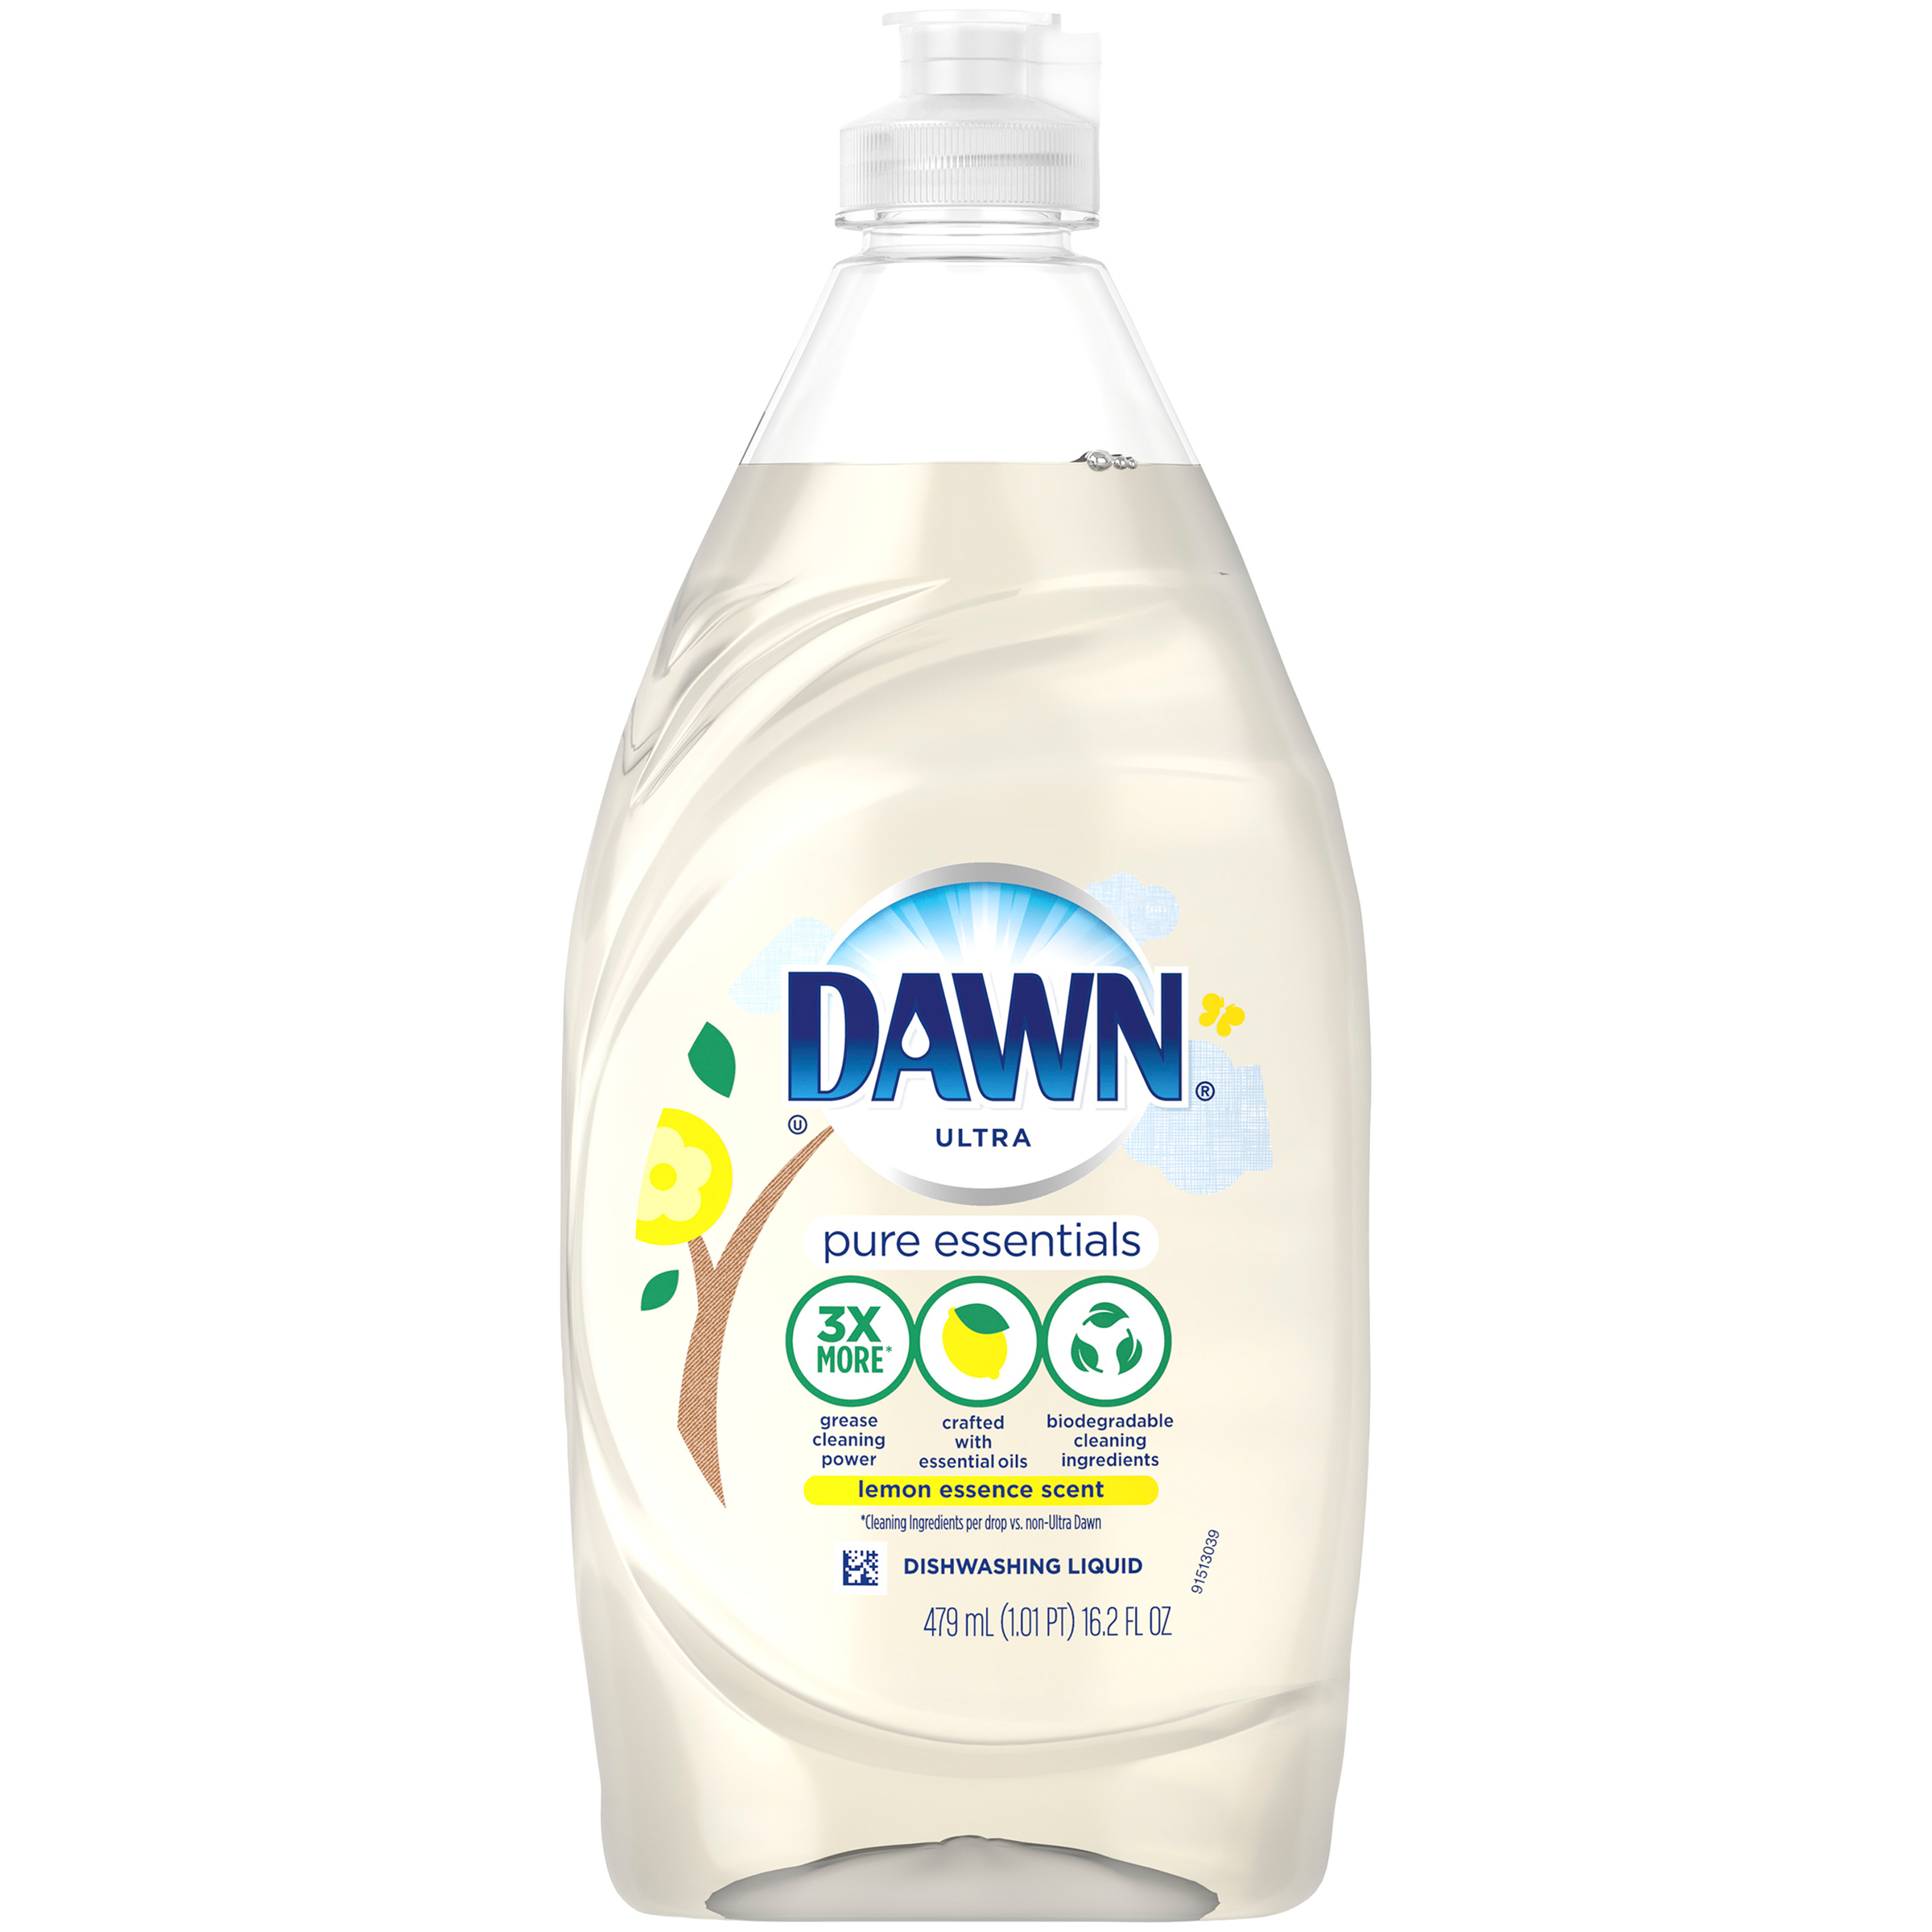 Pure Essentials Dawn Pure Essentials Dishwashing Liquid Dish Soap Lemon Essence 16.2 oz